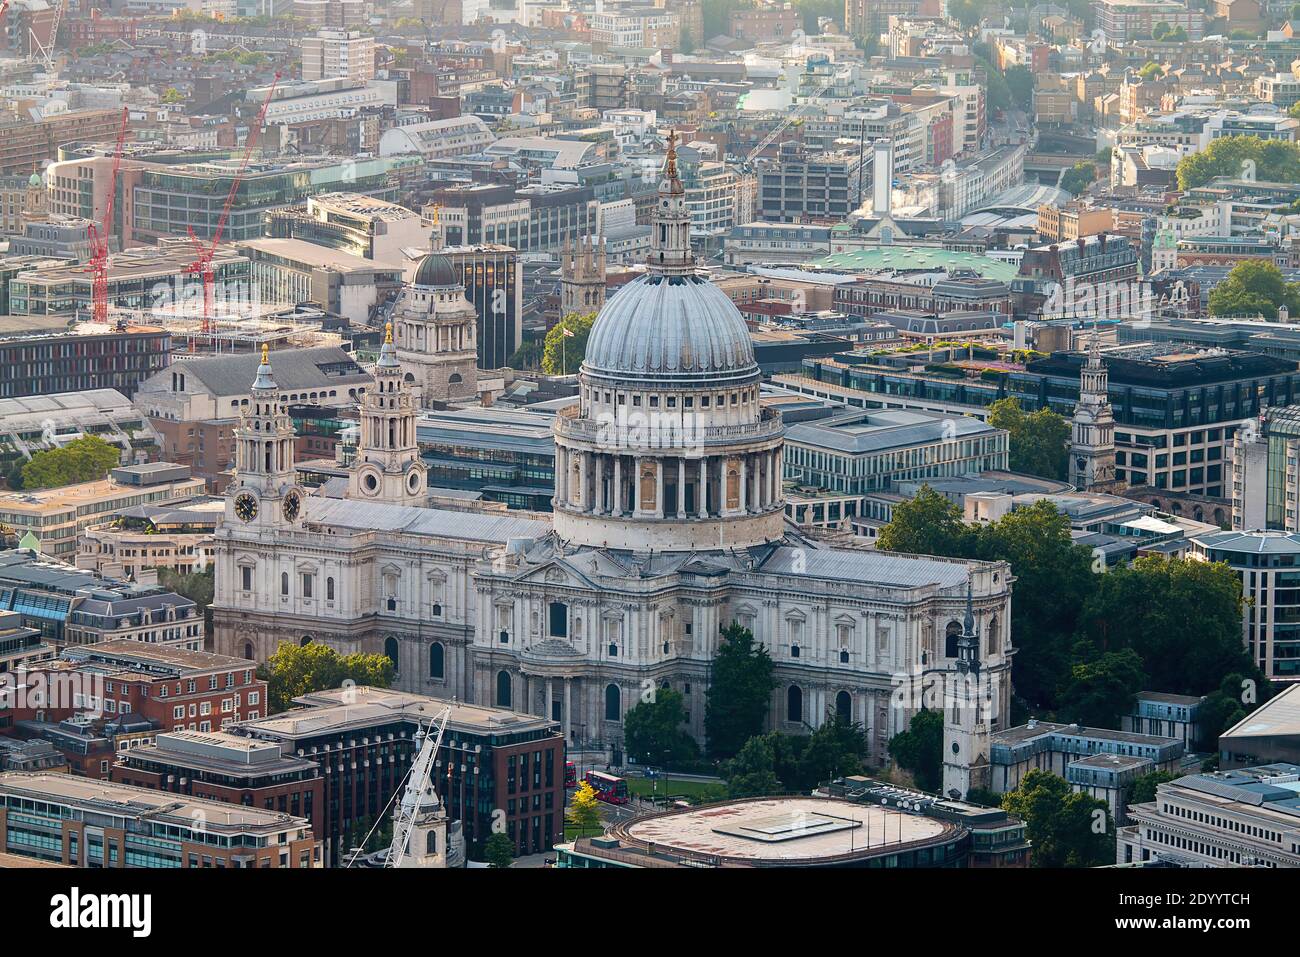 London, UK - April 20, 2020: St Paul's Cathedral in London, UK. Stock Photo